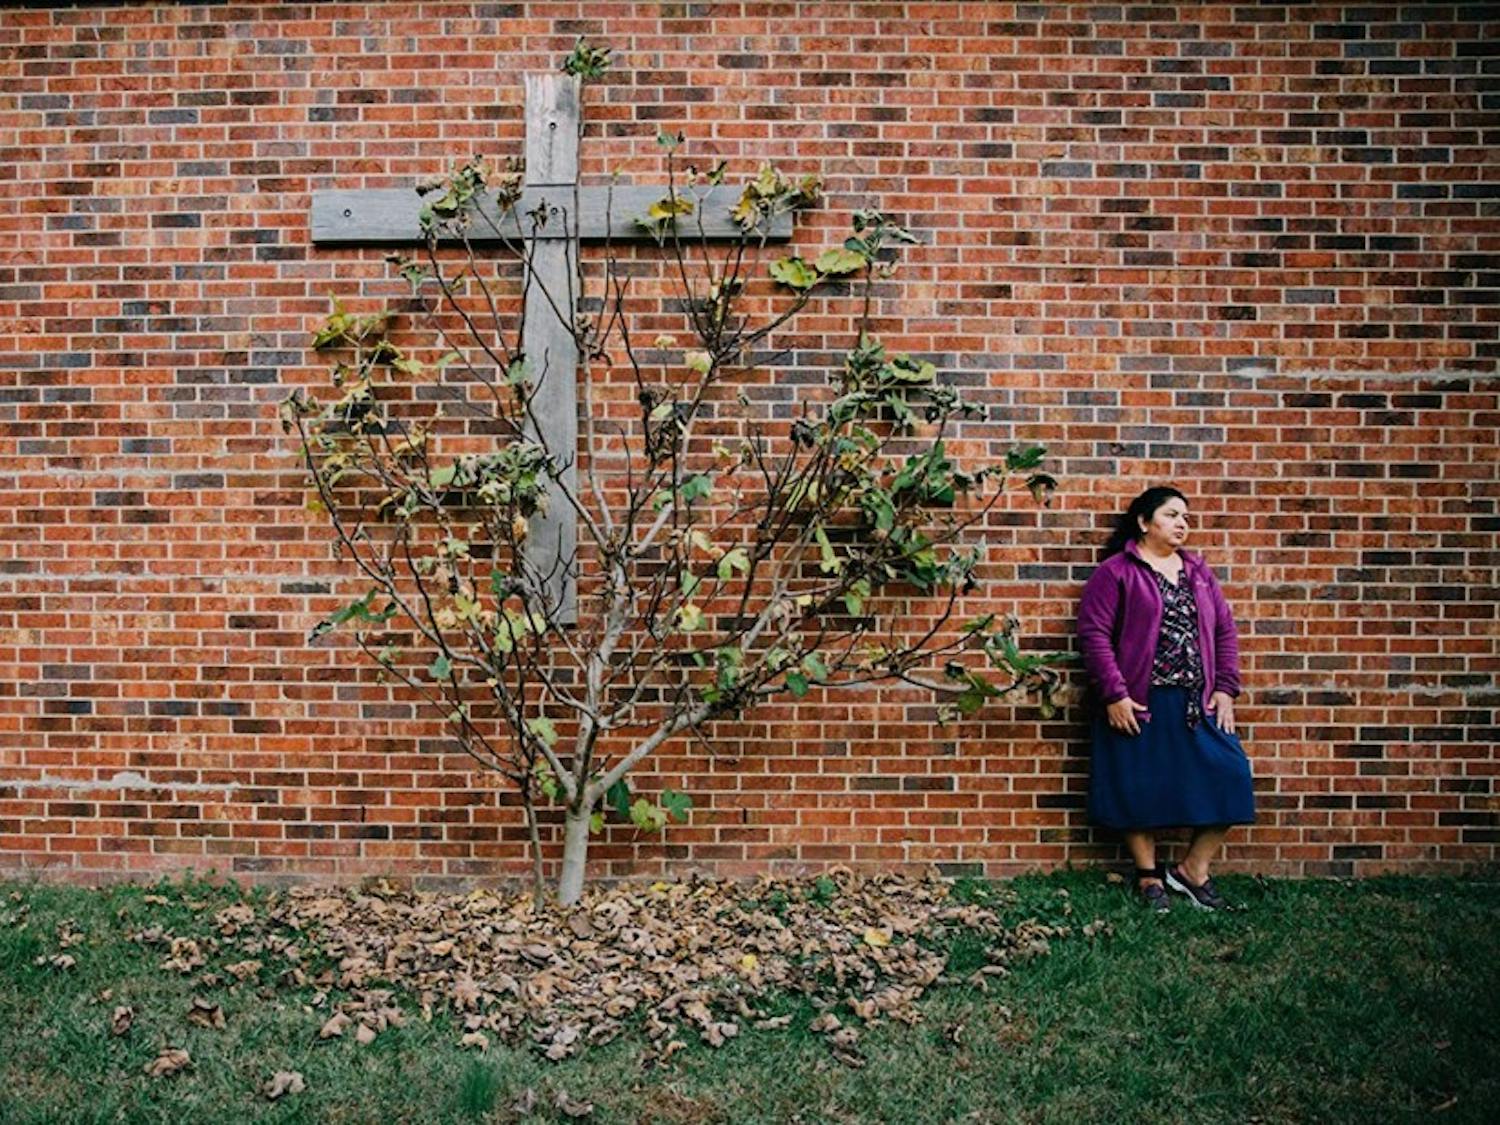 “Santuario” follows Juana Luz Tobar Ortega as she lives in sanctuary at St. Barnabas Episcopal Church in Greensboro.